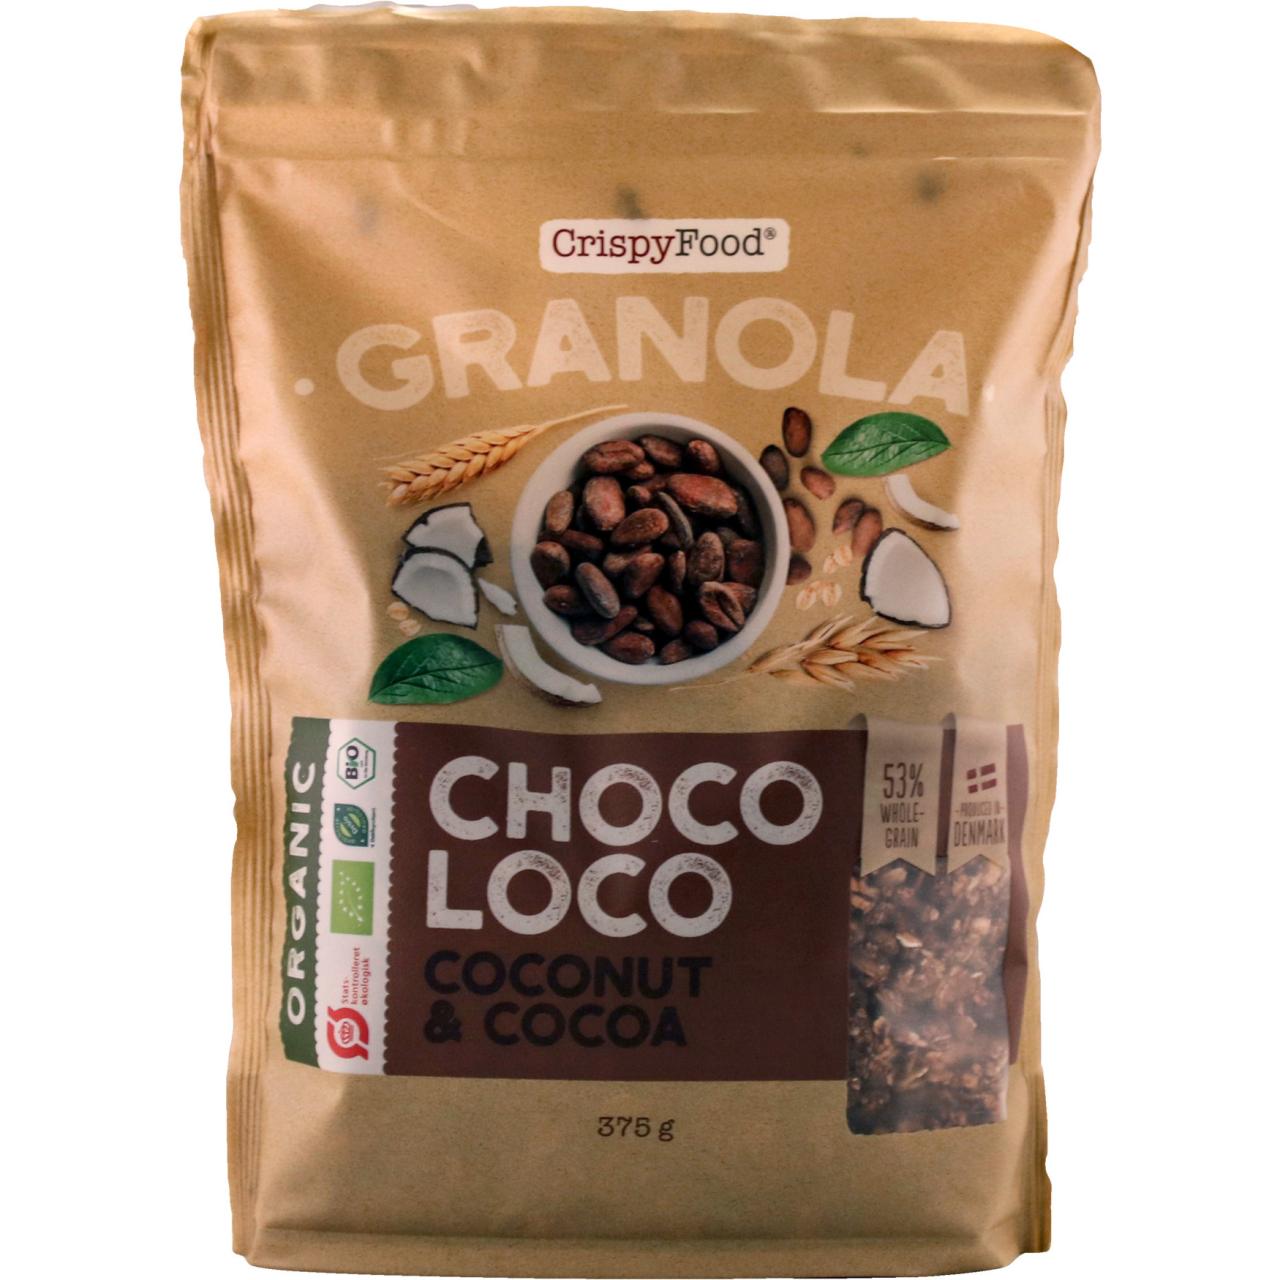 * Crispy Food Granola Choco Loco Øko 375g